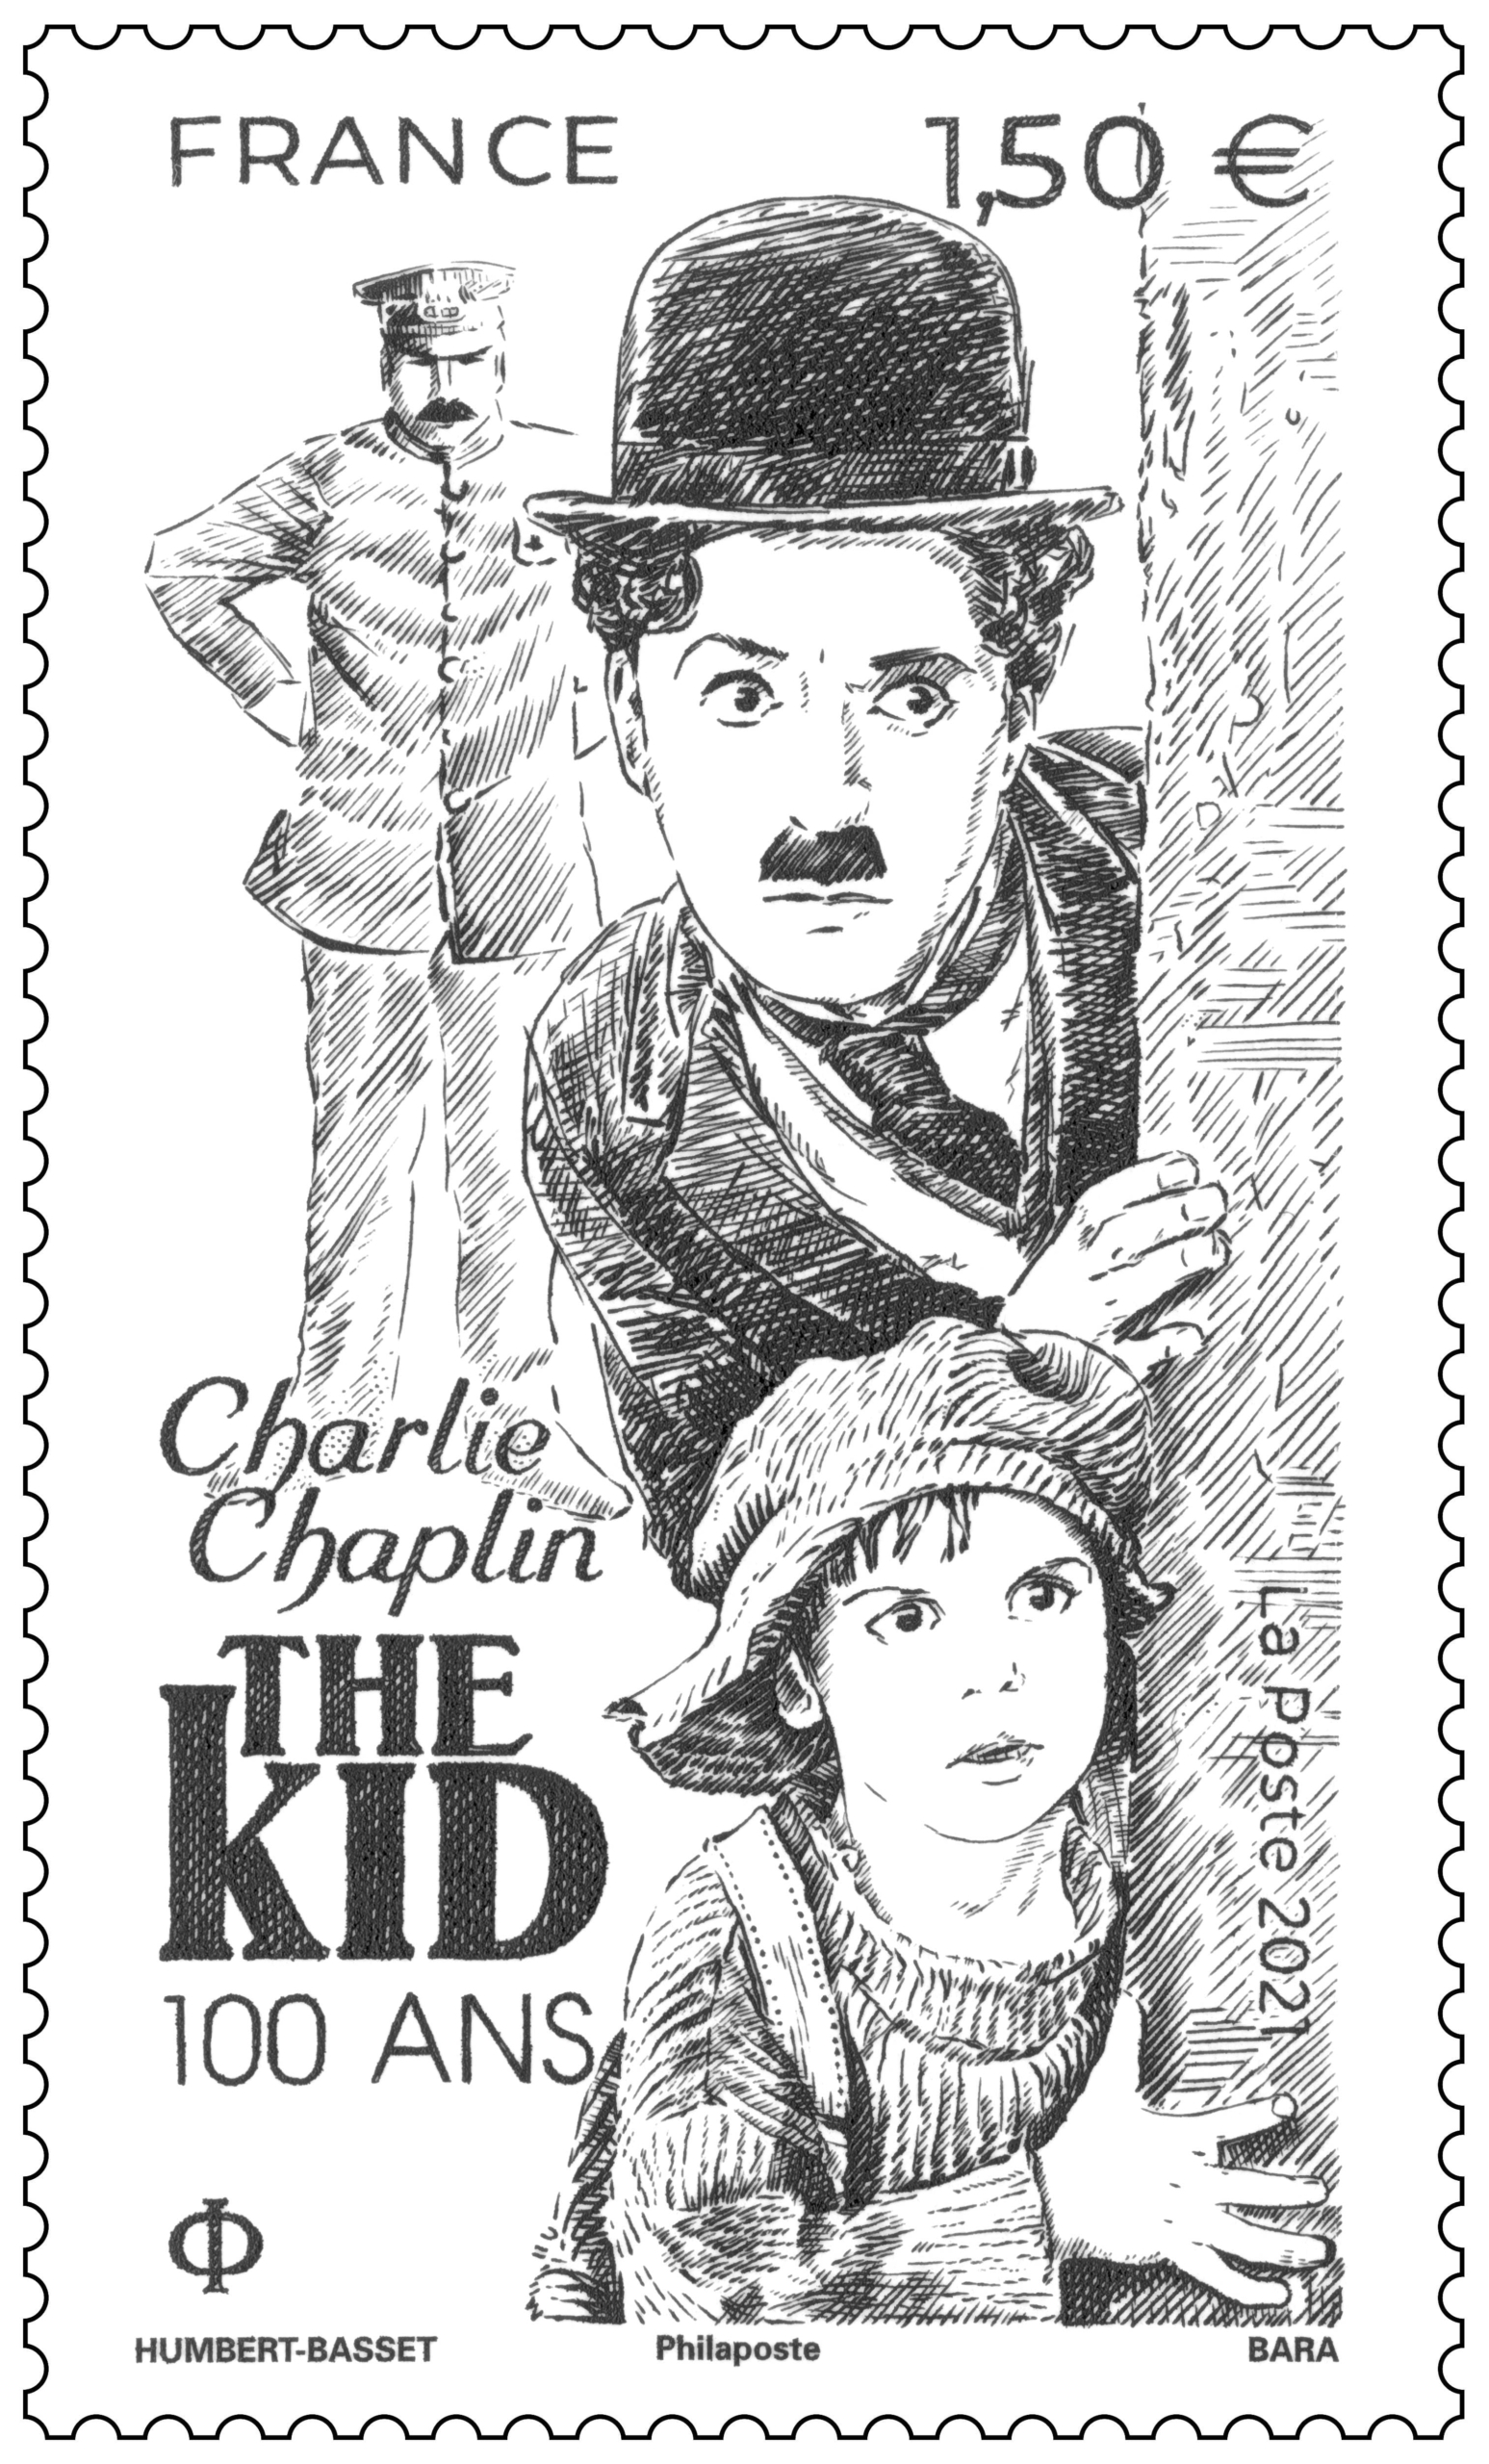 Timbre Charlie Chaplin The Kid 100 ans